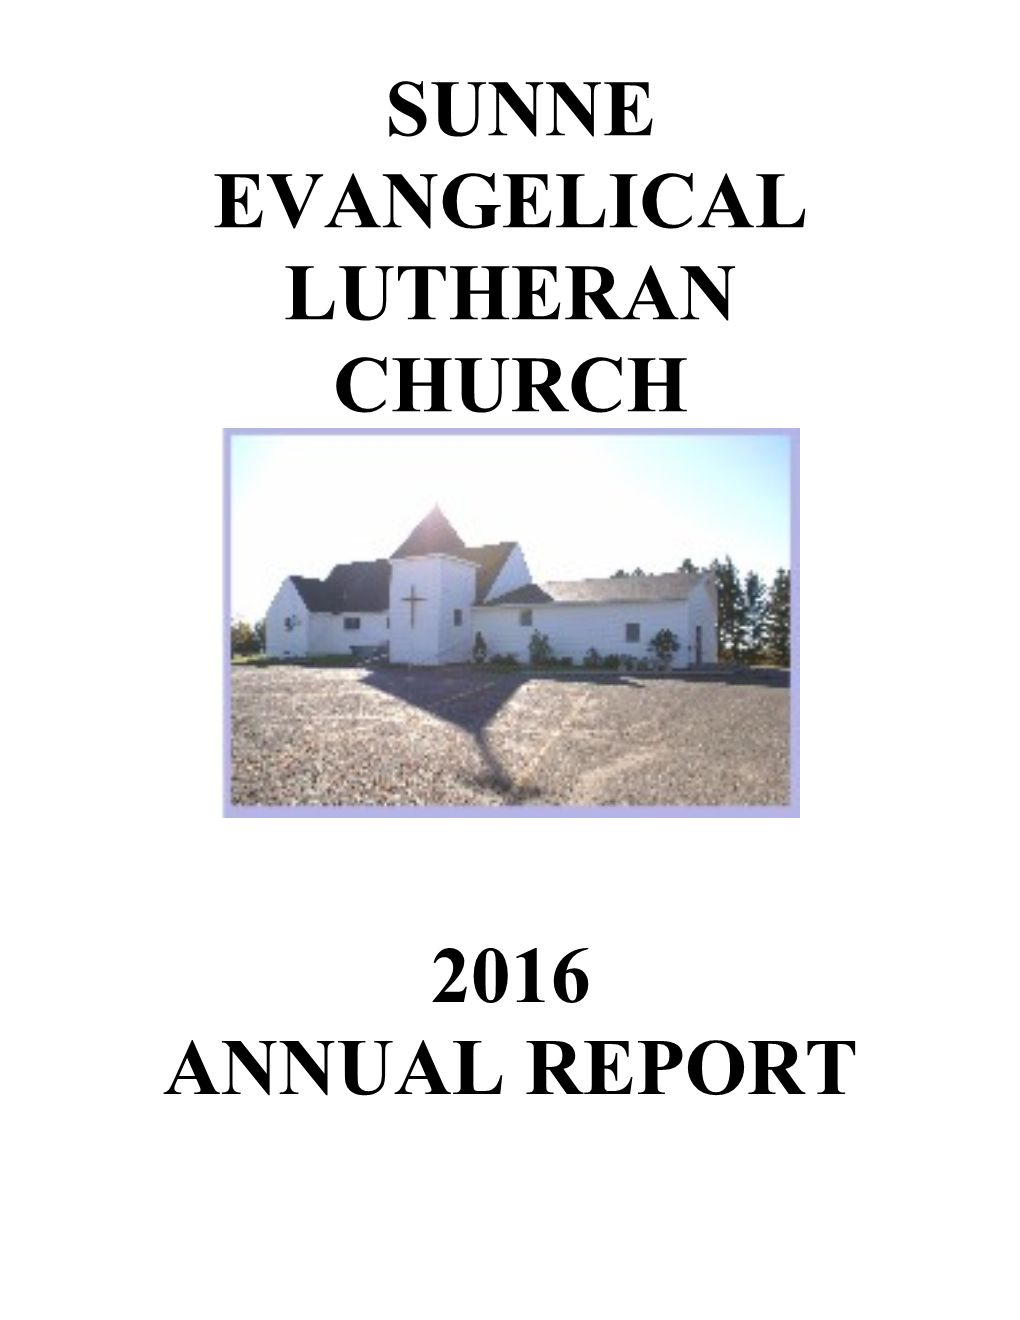 Sunne Evangelical Lutheran Church Council